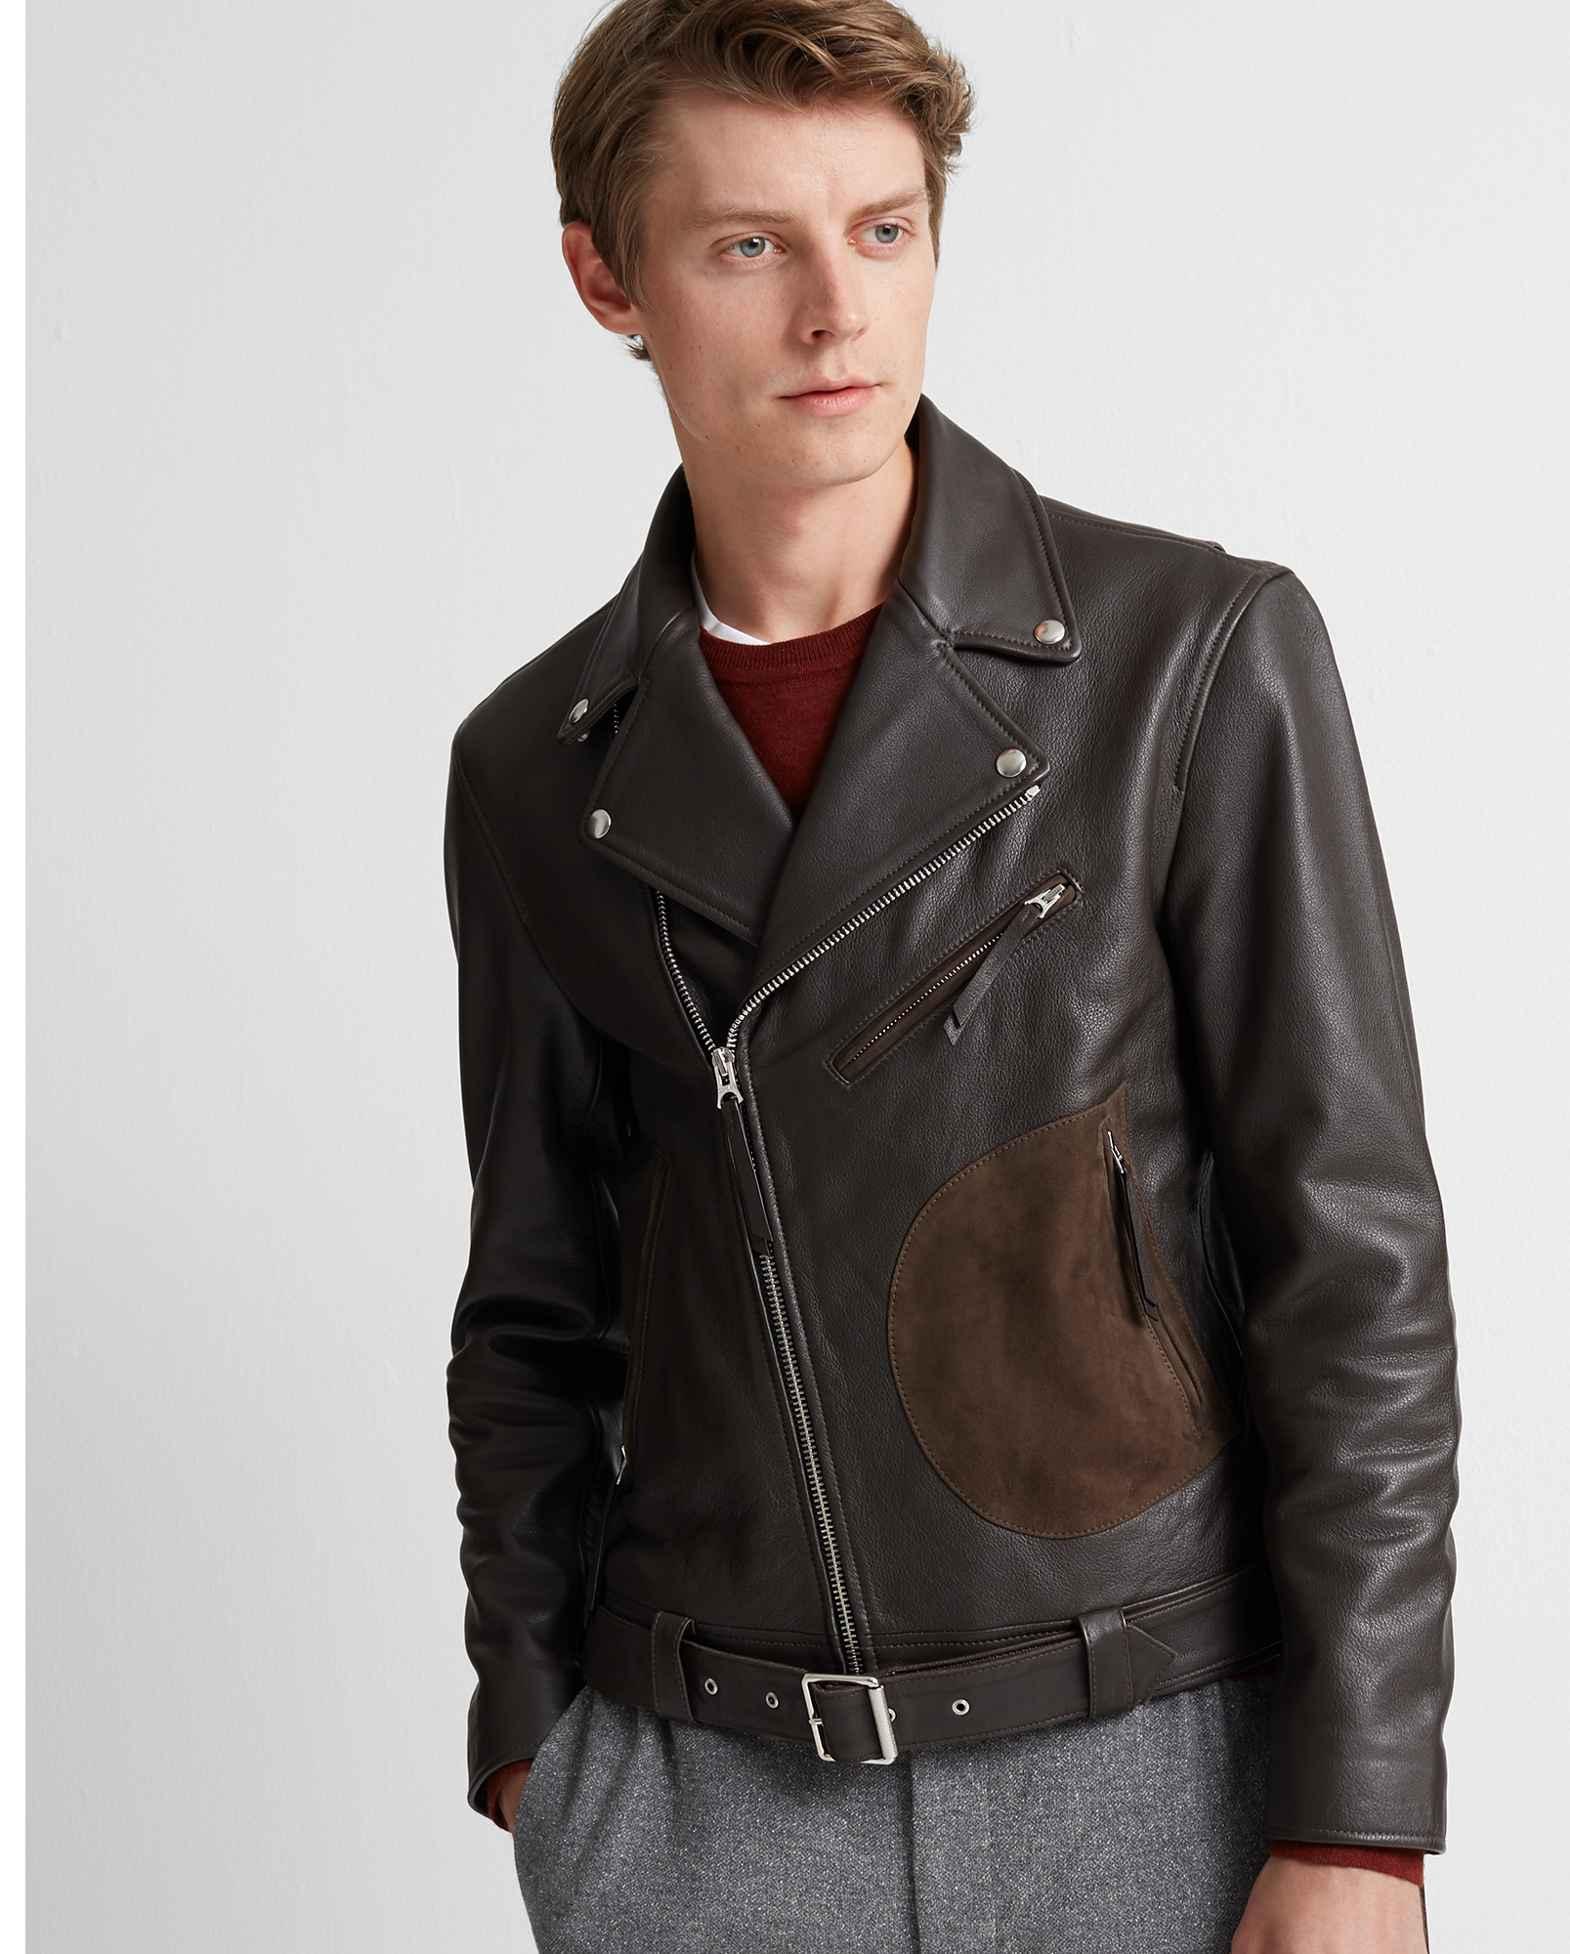 Club Monaco Brown Leather Biker Jacket for Men - Lyst